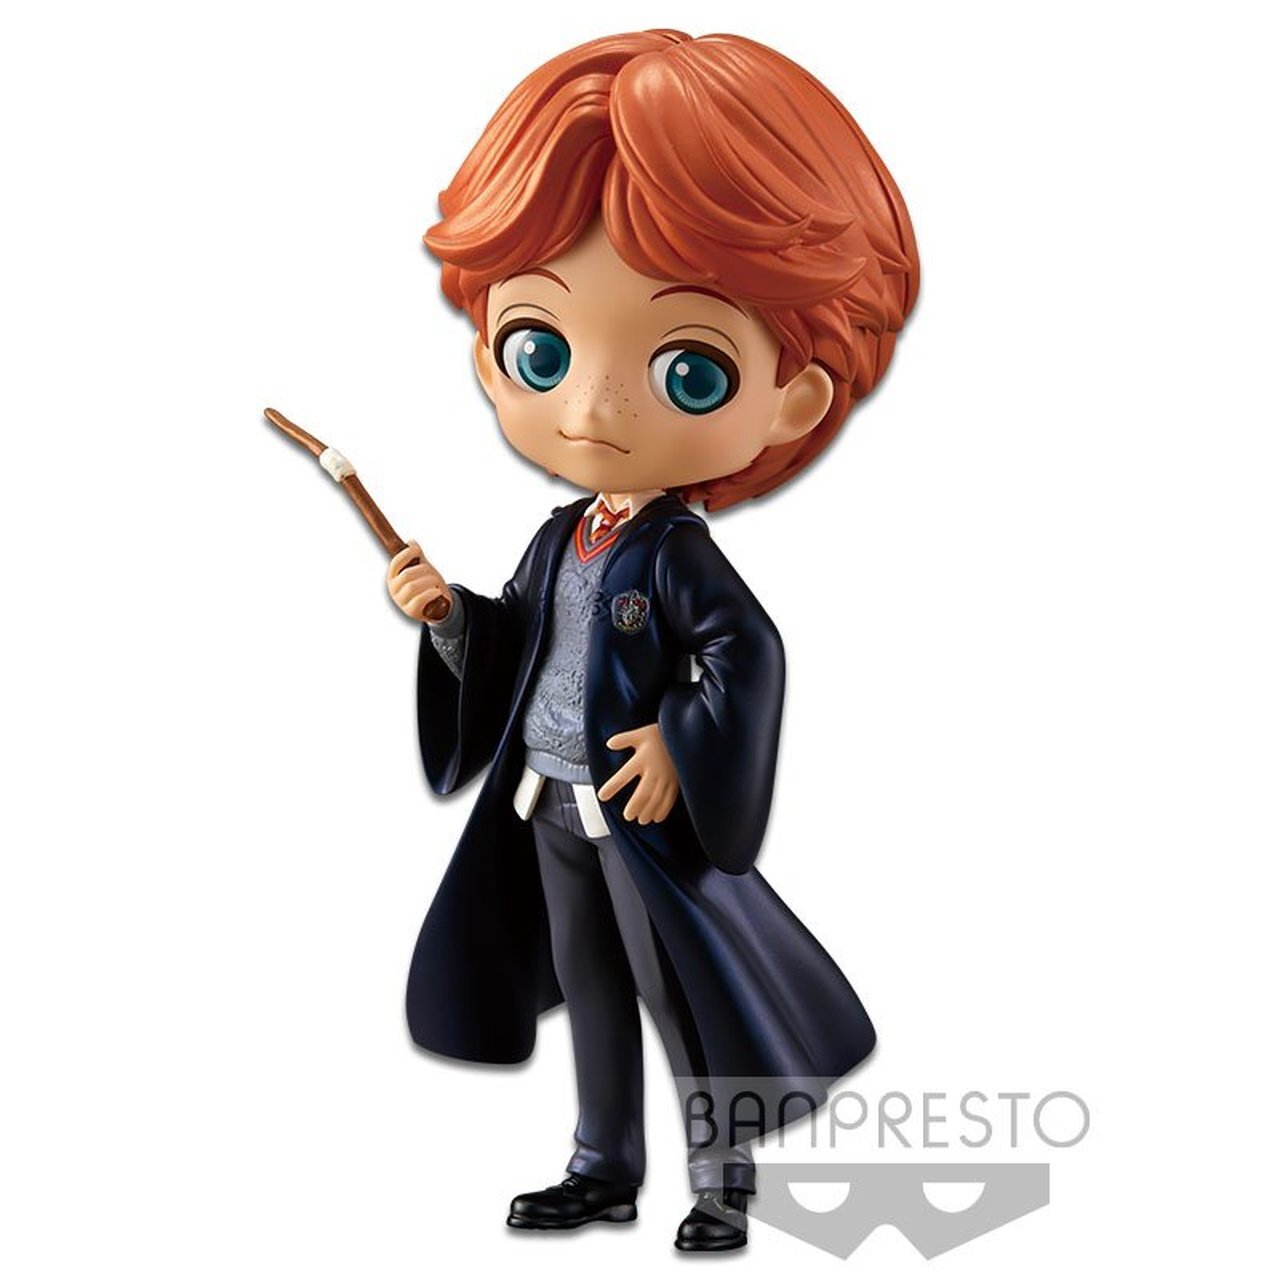 Banpresto Harry Potter Q posket Quidditch Figure Figurine 14cm Normal PVC 